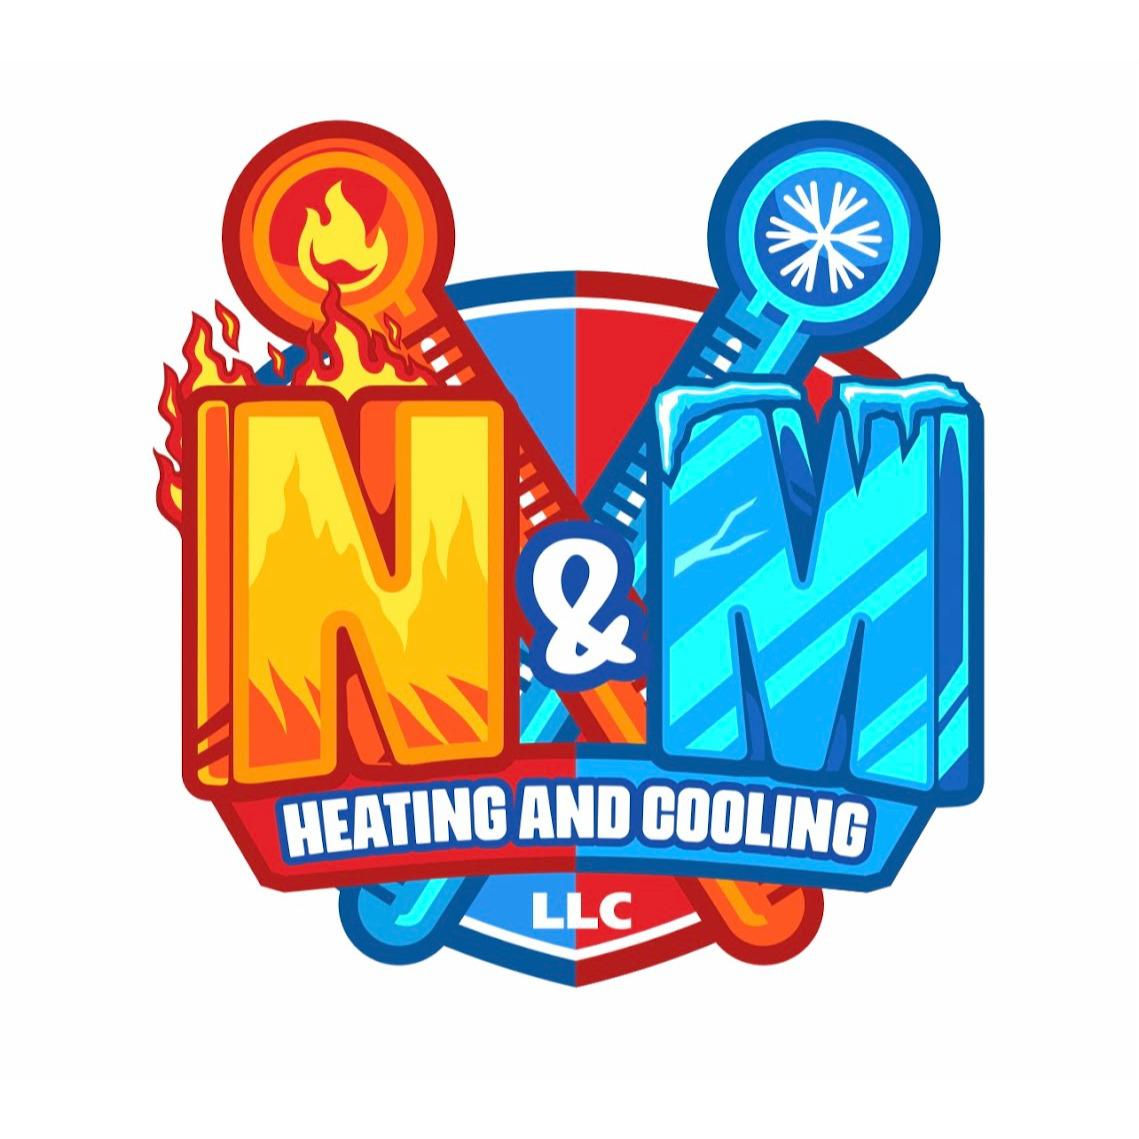 N&M Heating and Cooling LLC - Hereford, AZ - (520)508-9899 | ShowMeLocal.com